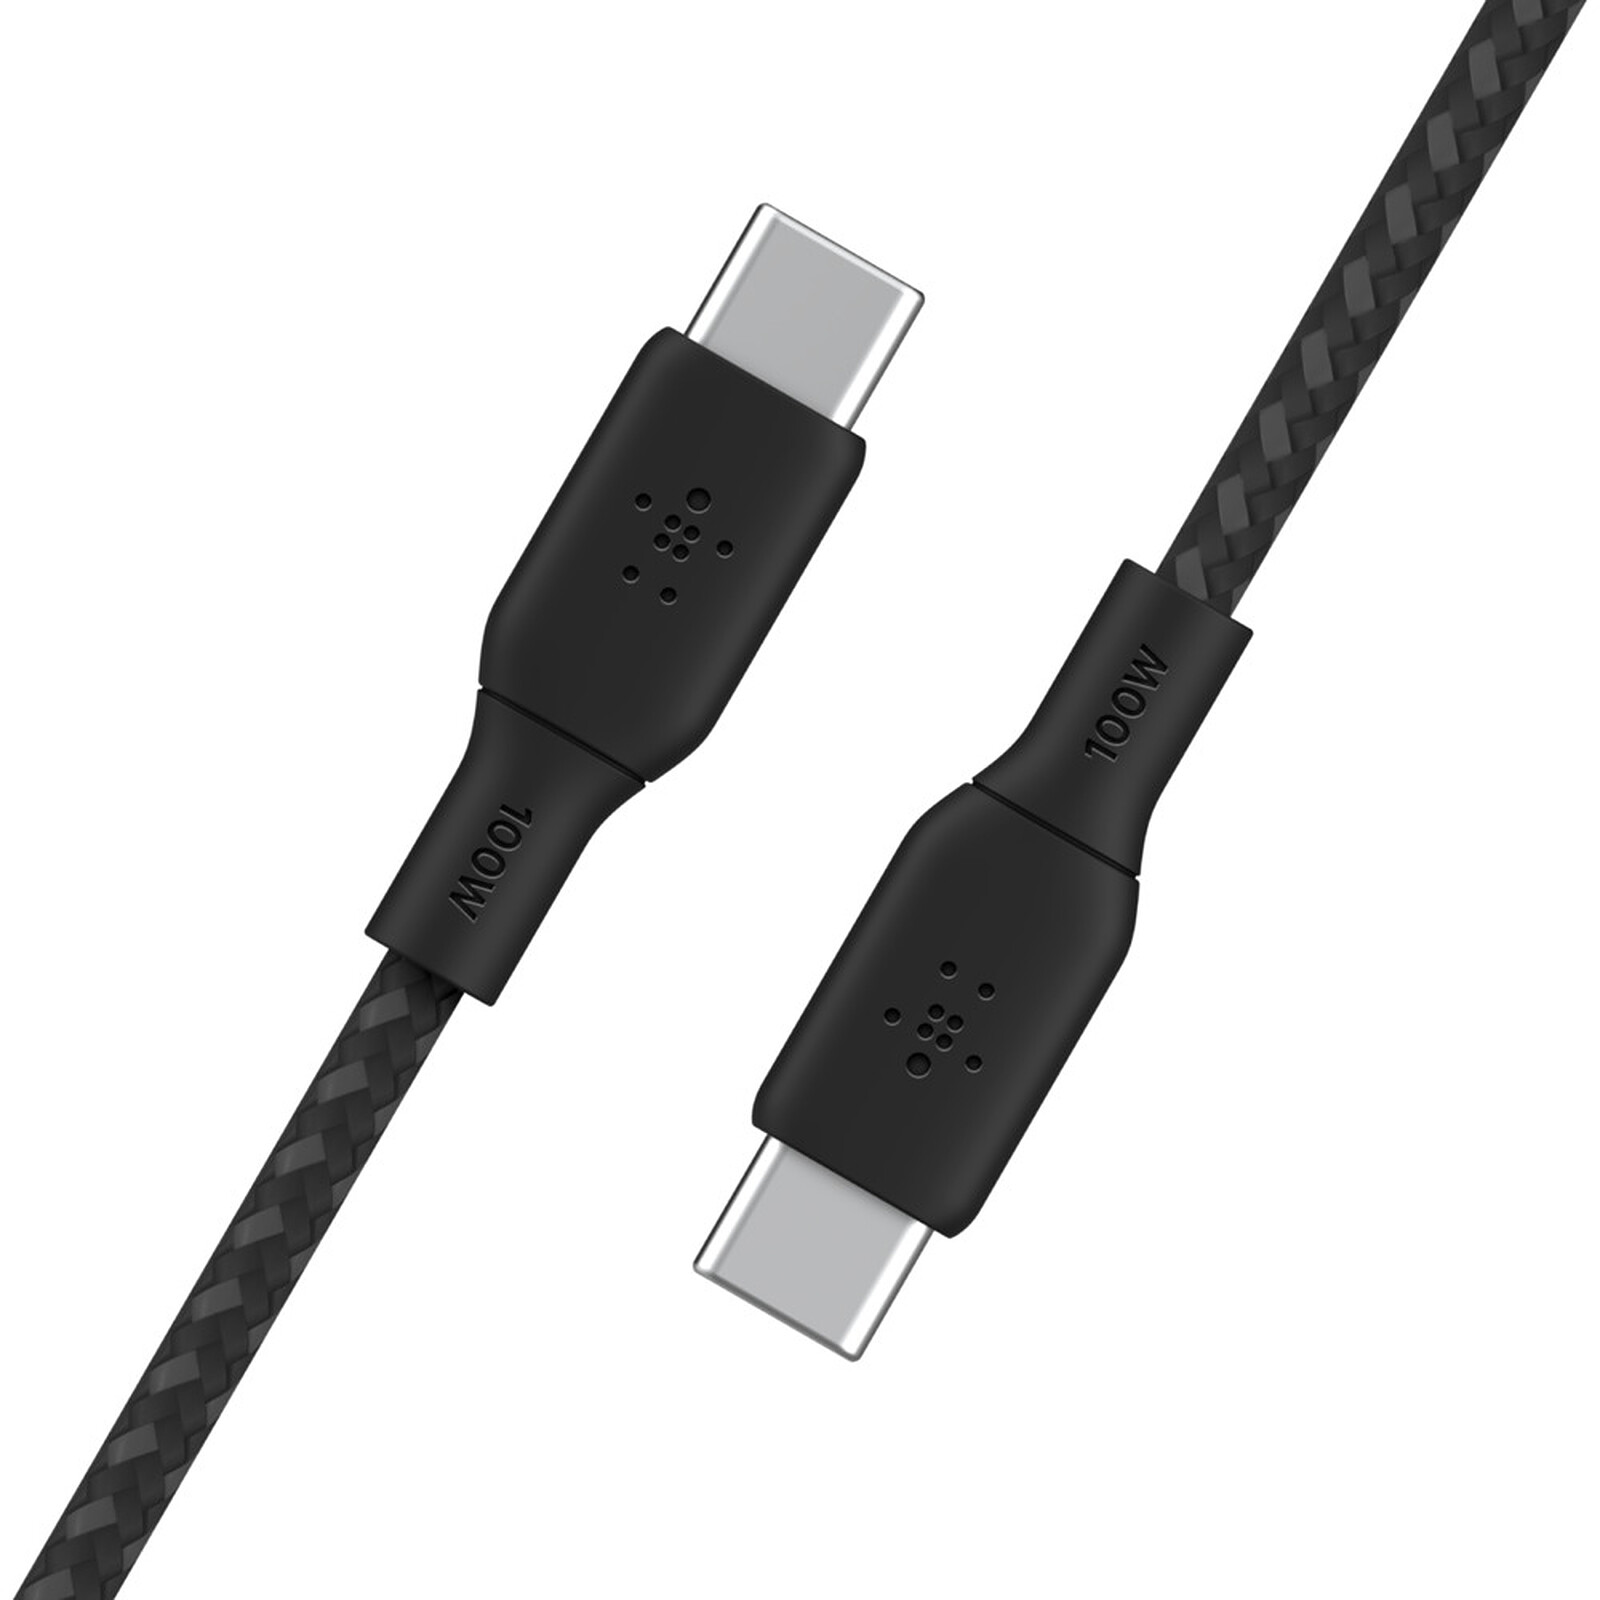 Belkin Adaptateur USB-C vers RJ45 Gigabit Ethernet passtrhough 60